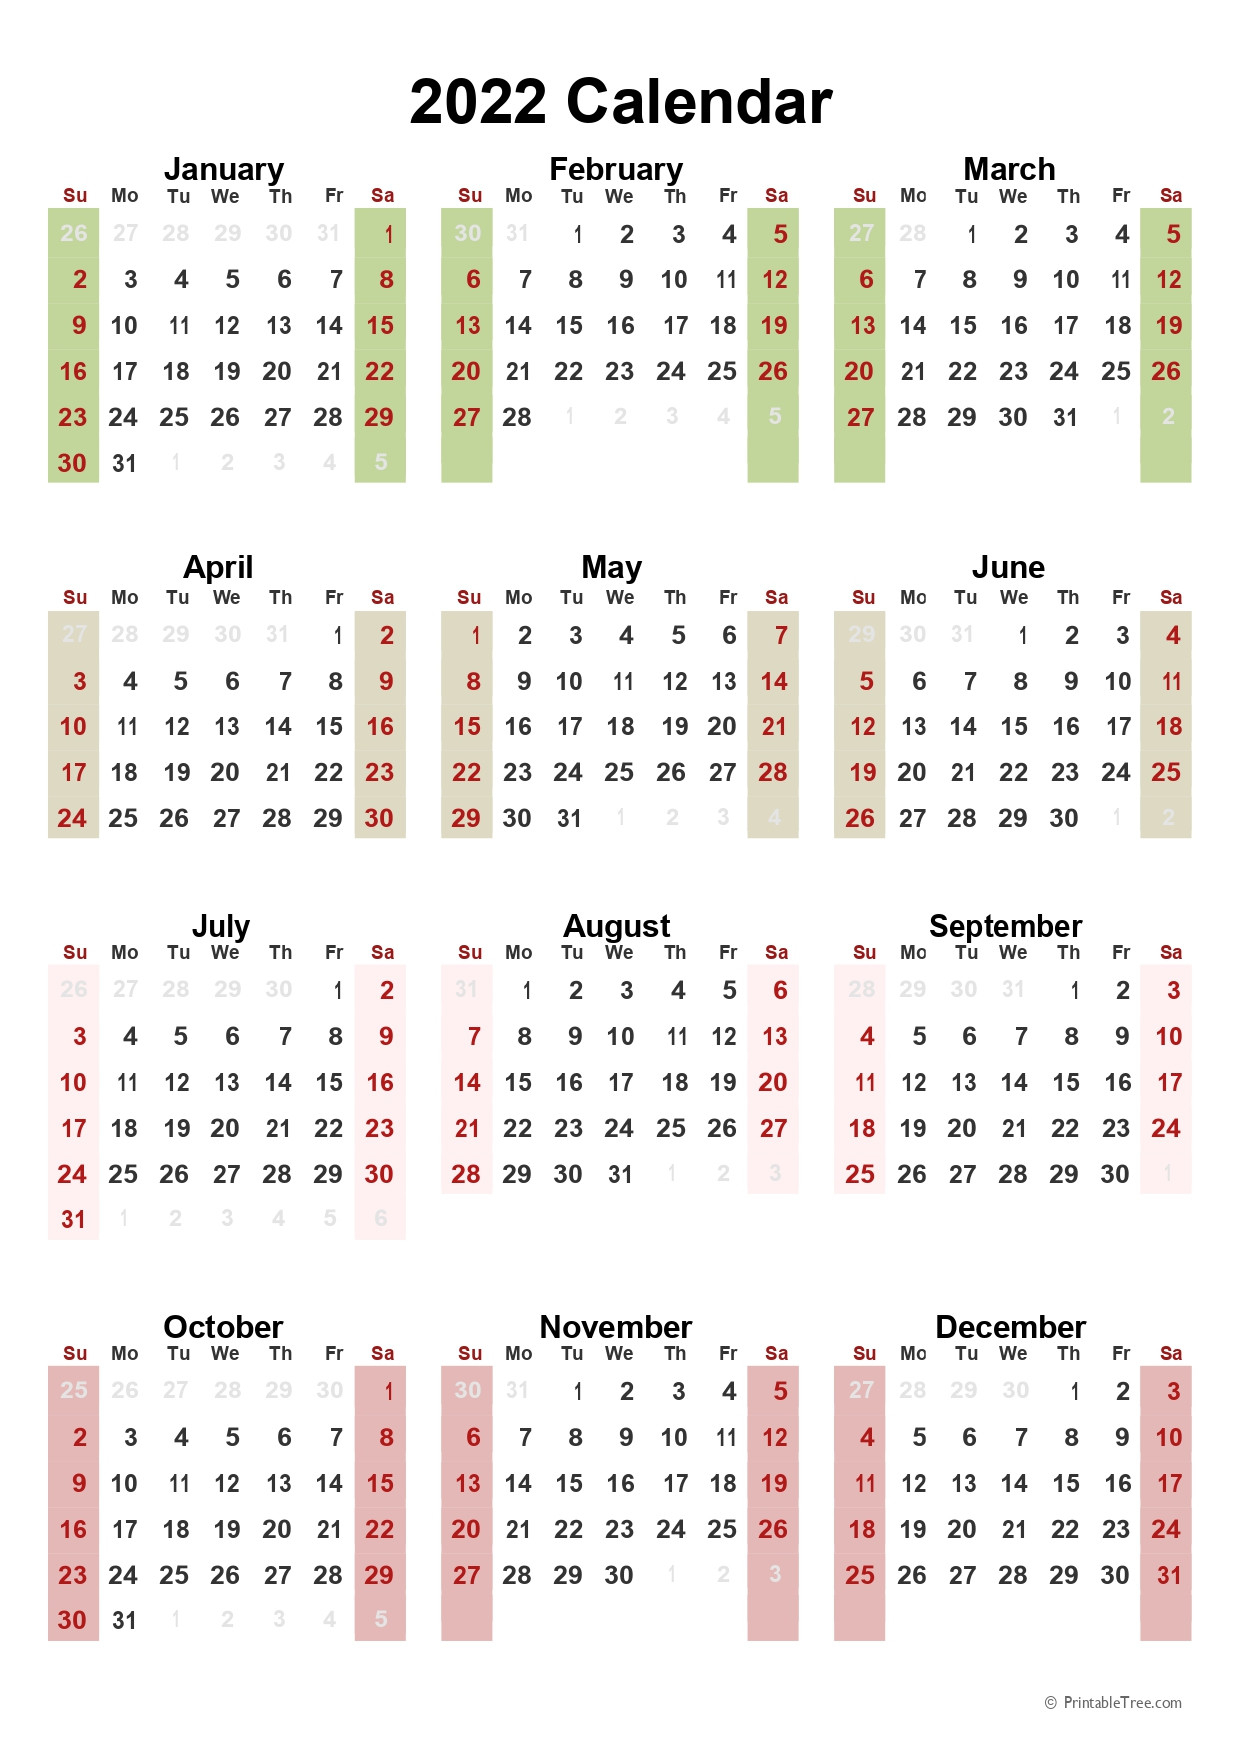 2022 Calendar Printable One Page - Printable 2022 Calendar One Page-Two Year Calendar 2021 And 2022 Printable